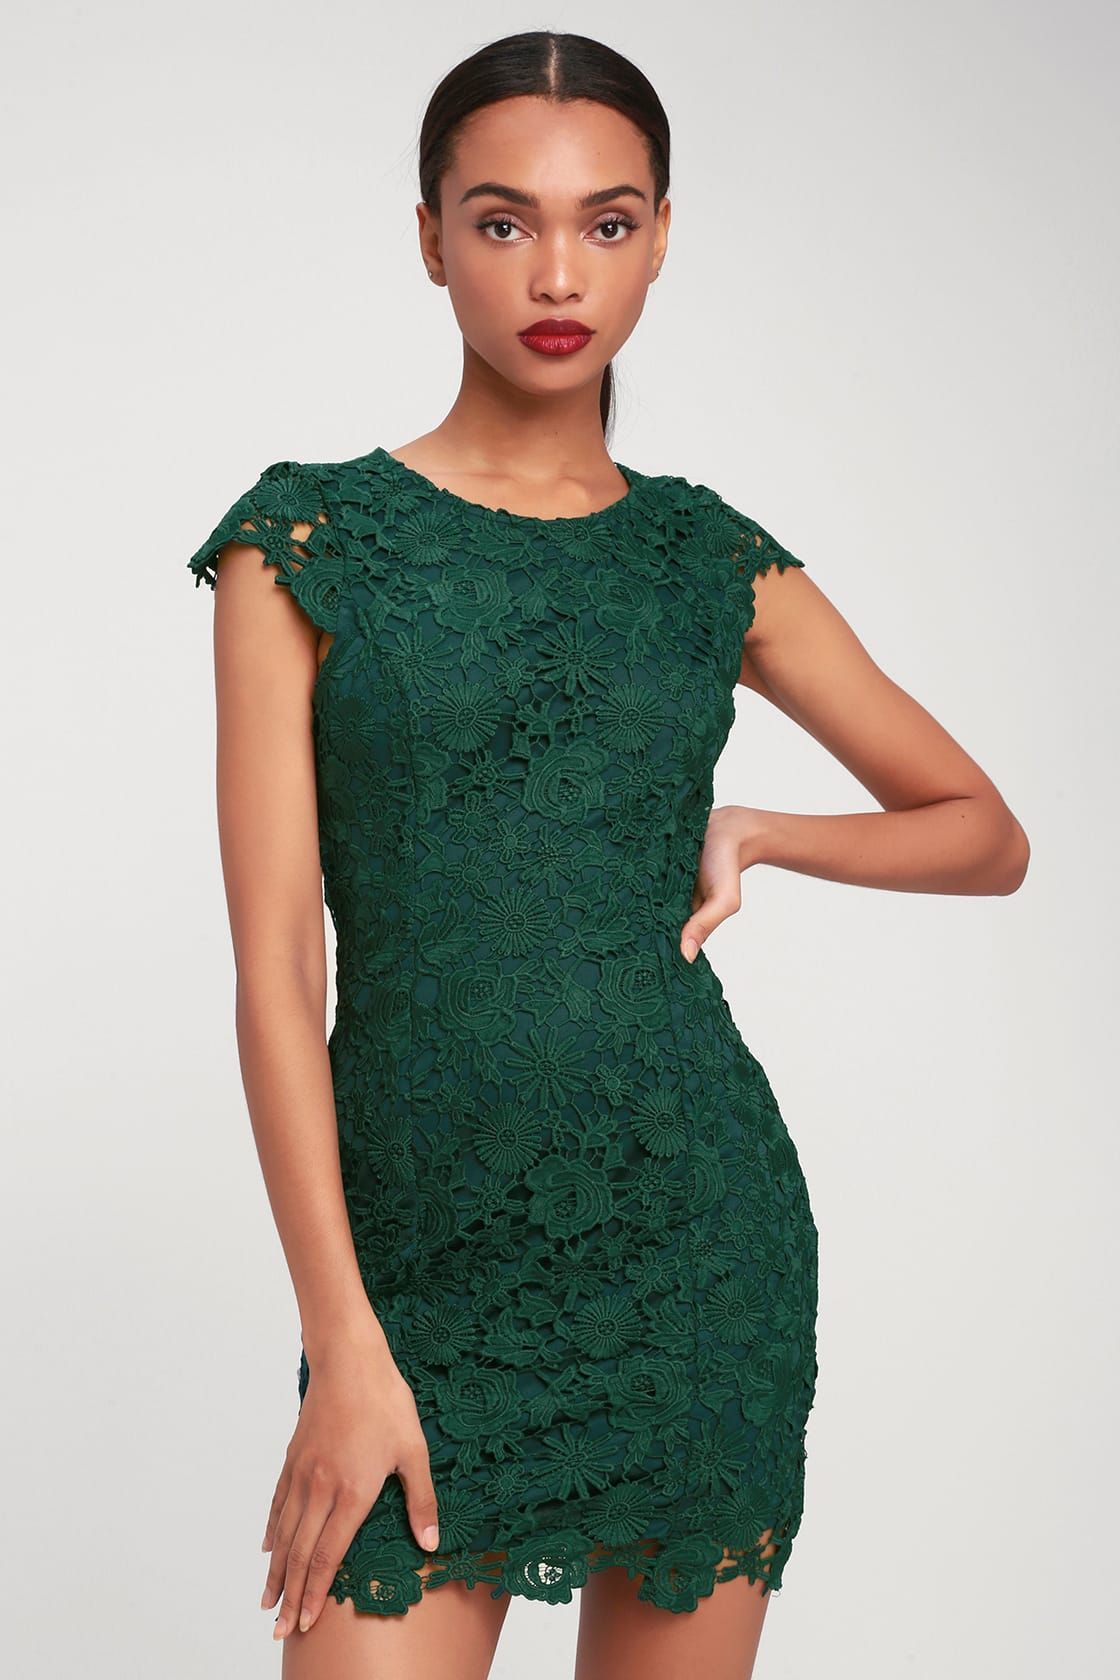 Romance Language Dark Green Backless Lace Dress -   19 dress Green lace ideas